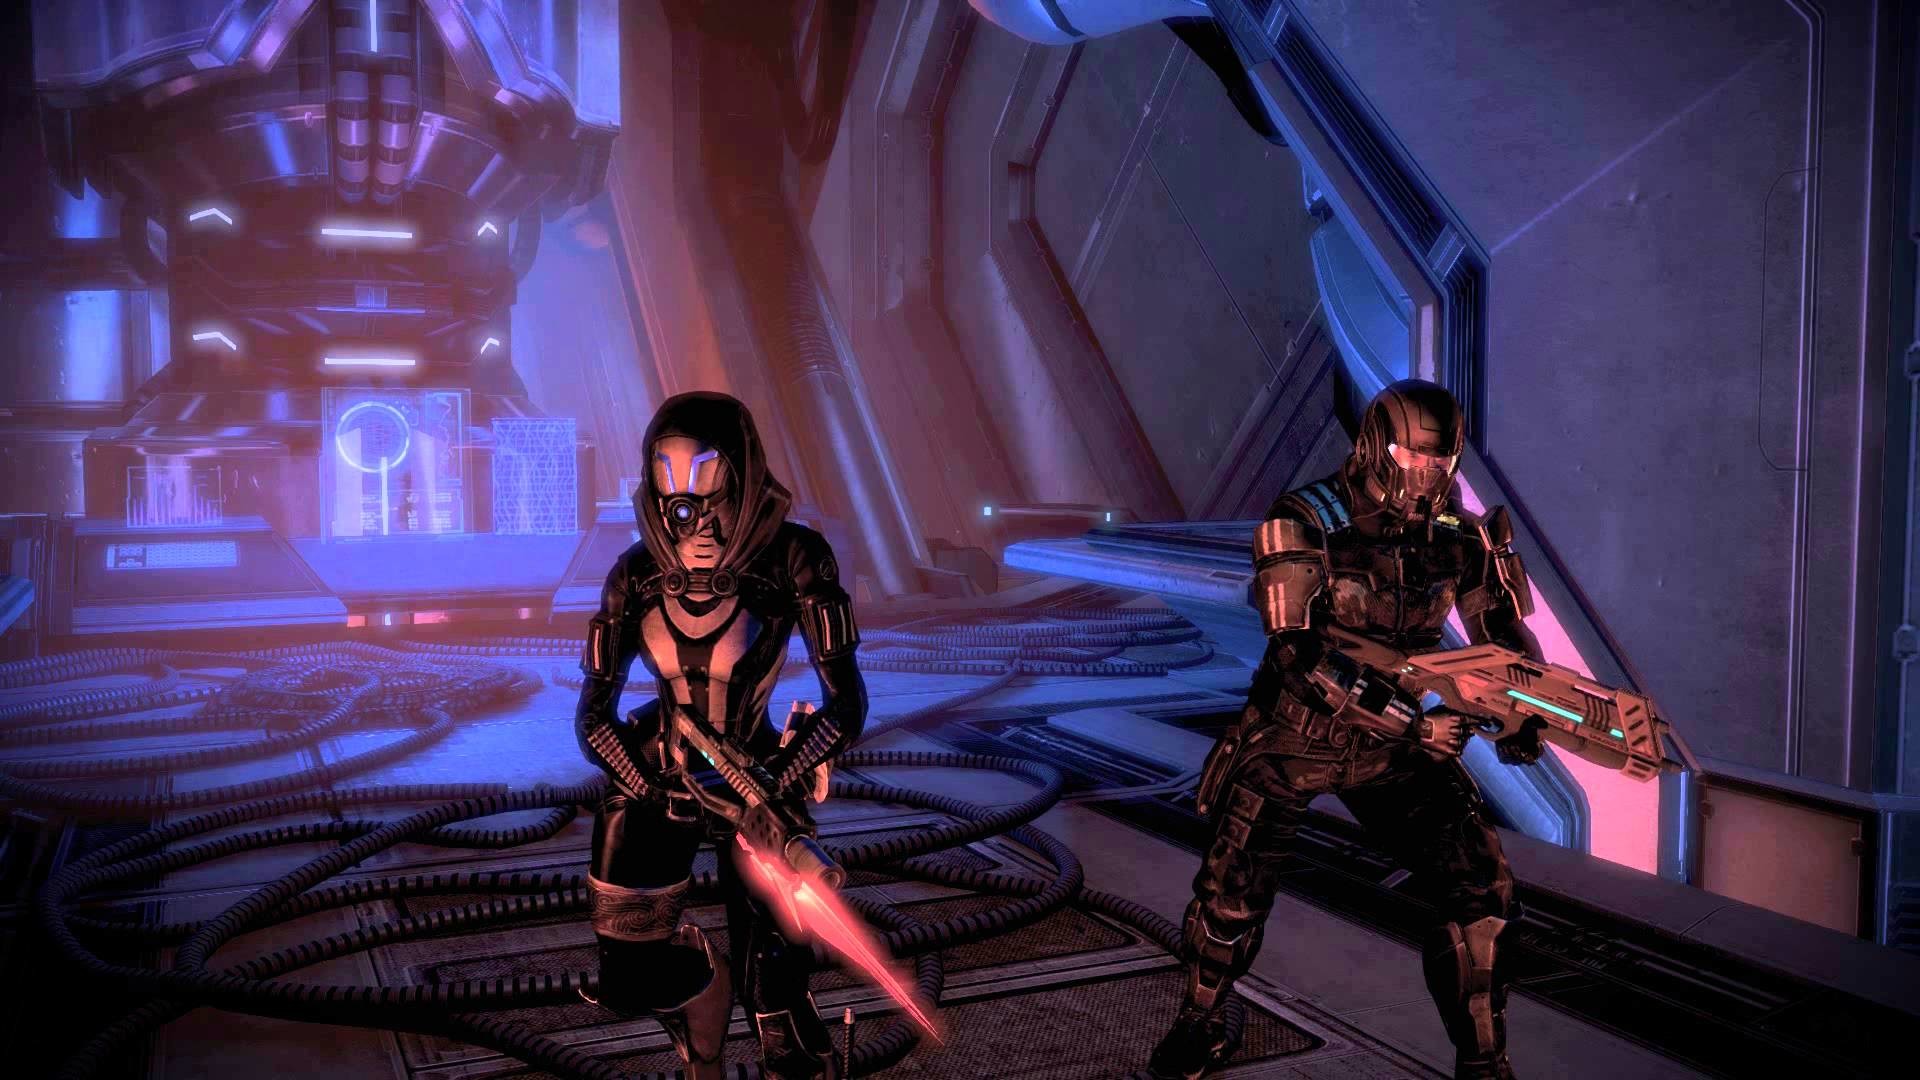 1920x1080 Mass Effect 3 Tali and Kaiden Ready for Battle Dreamscene Video Wallpaper